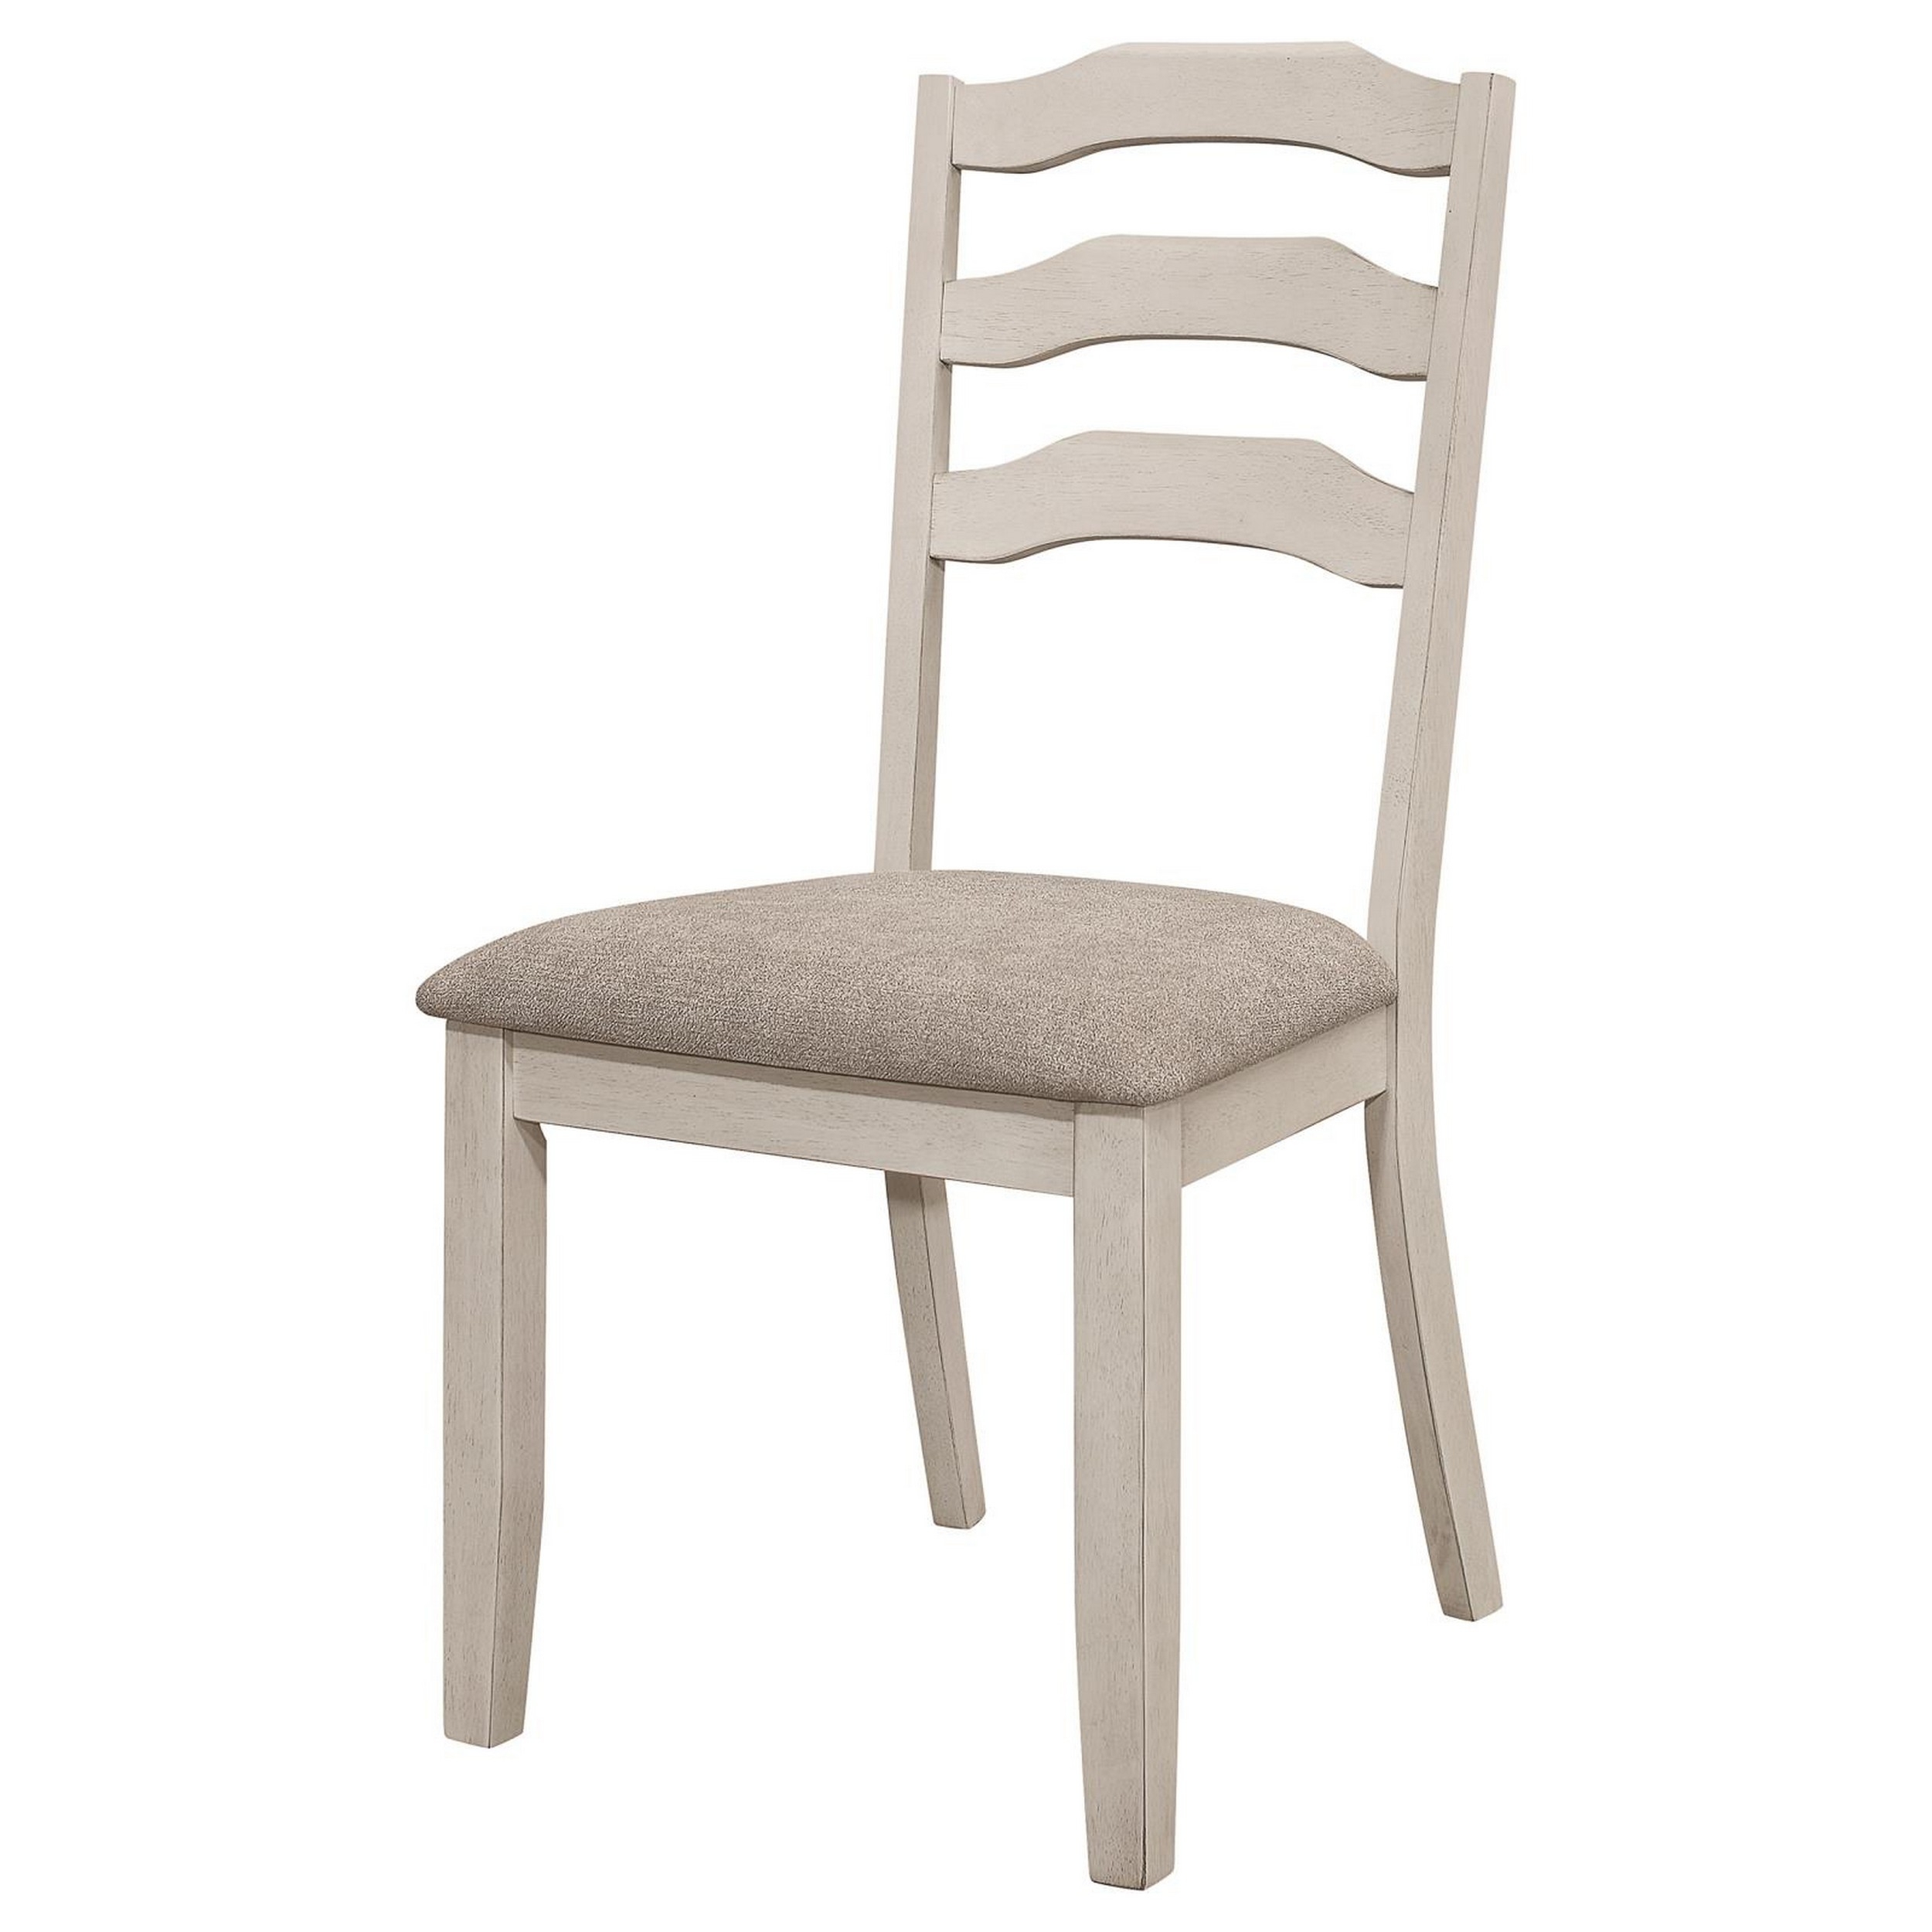 Rina 24 Inch Dining Chair, Set Of 2, Ladderback, Cream, Asian Hardwood -Saltoro Sherpi